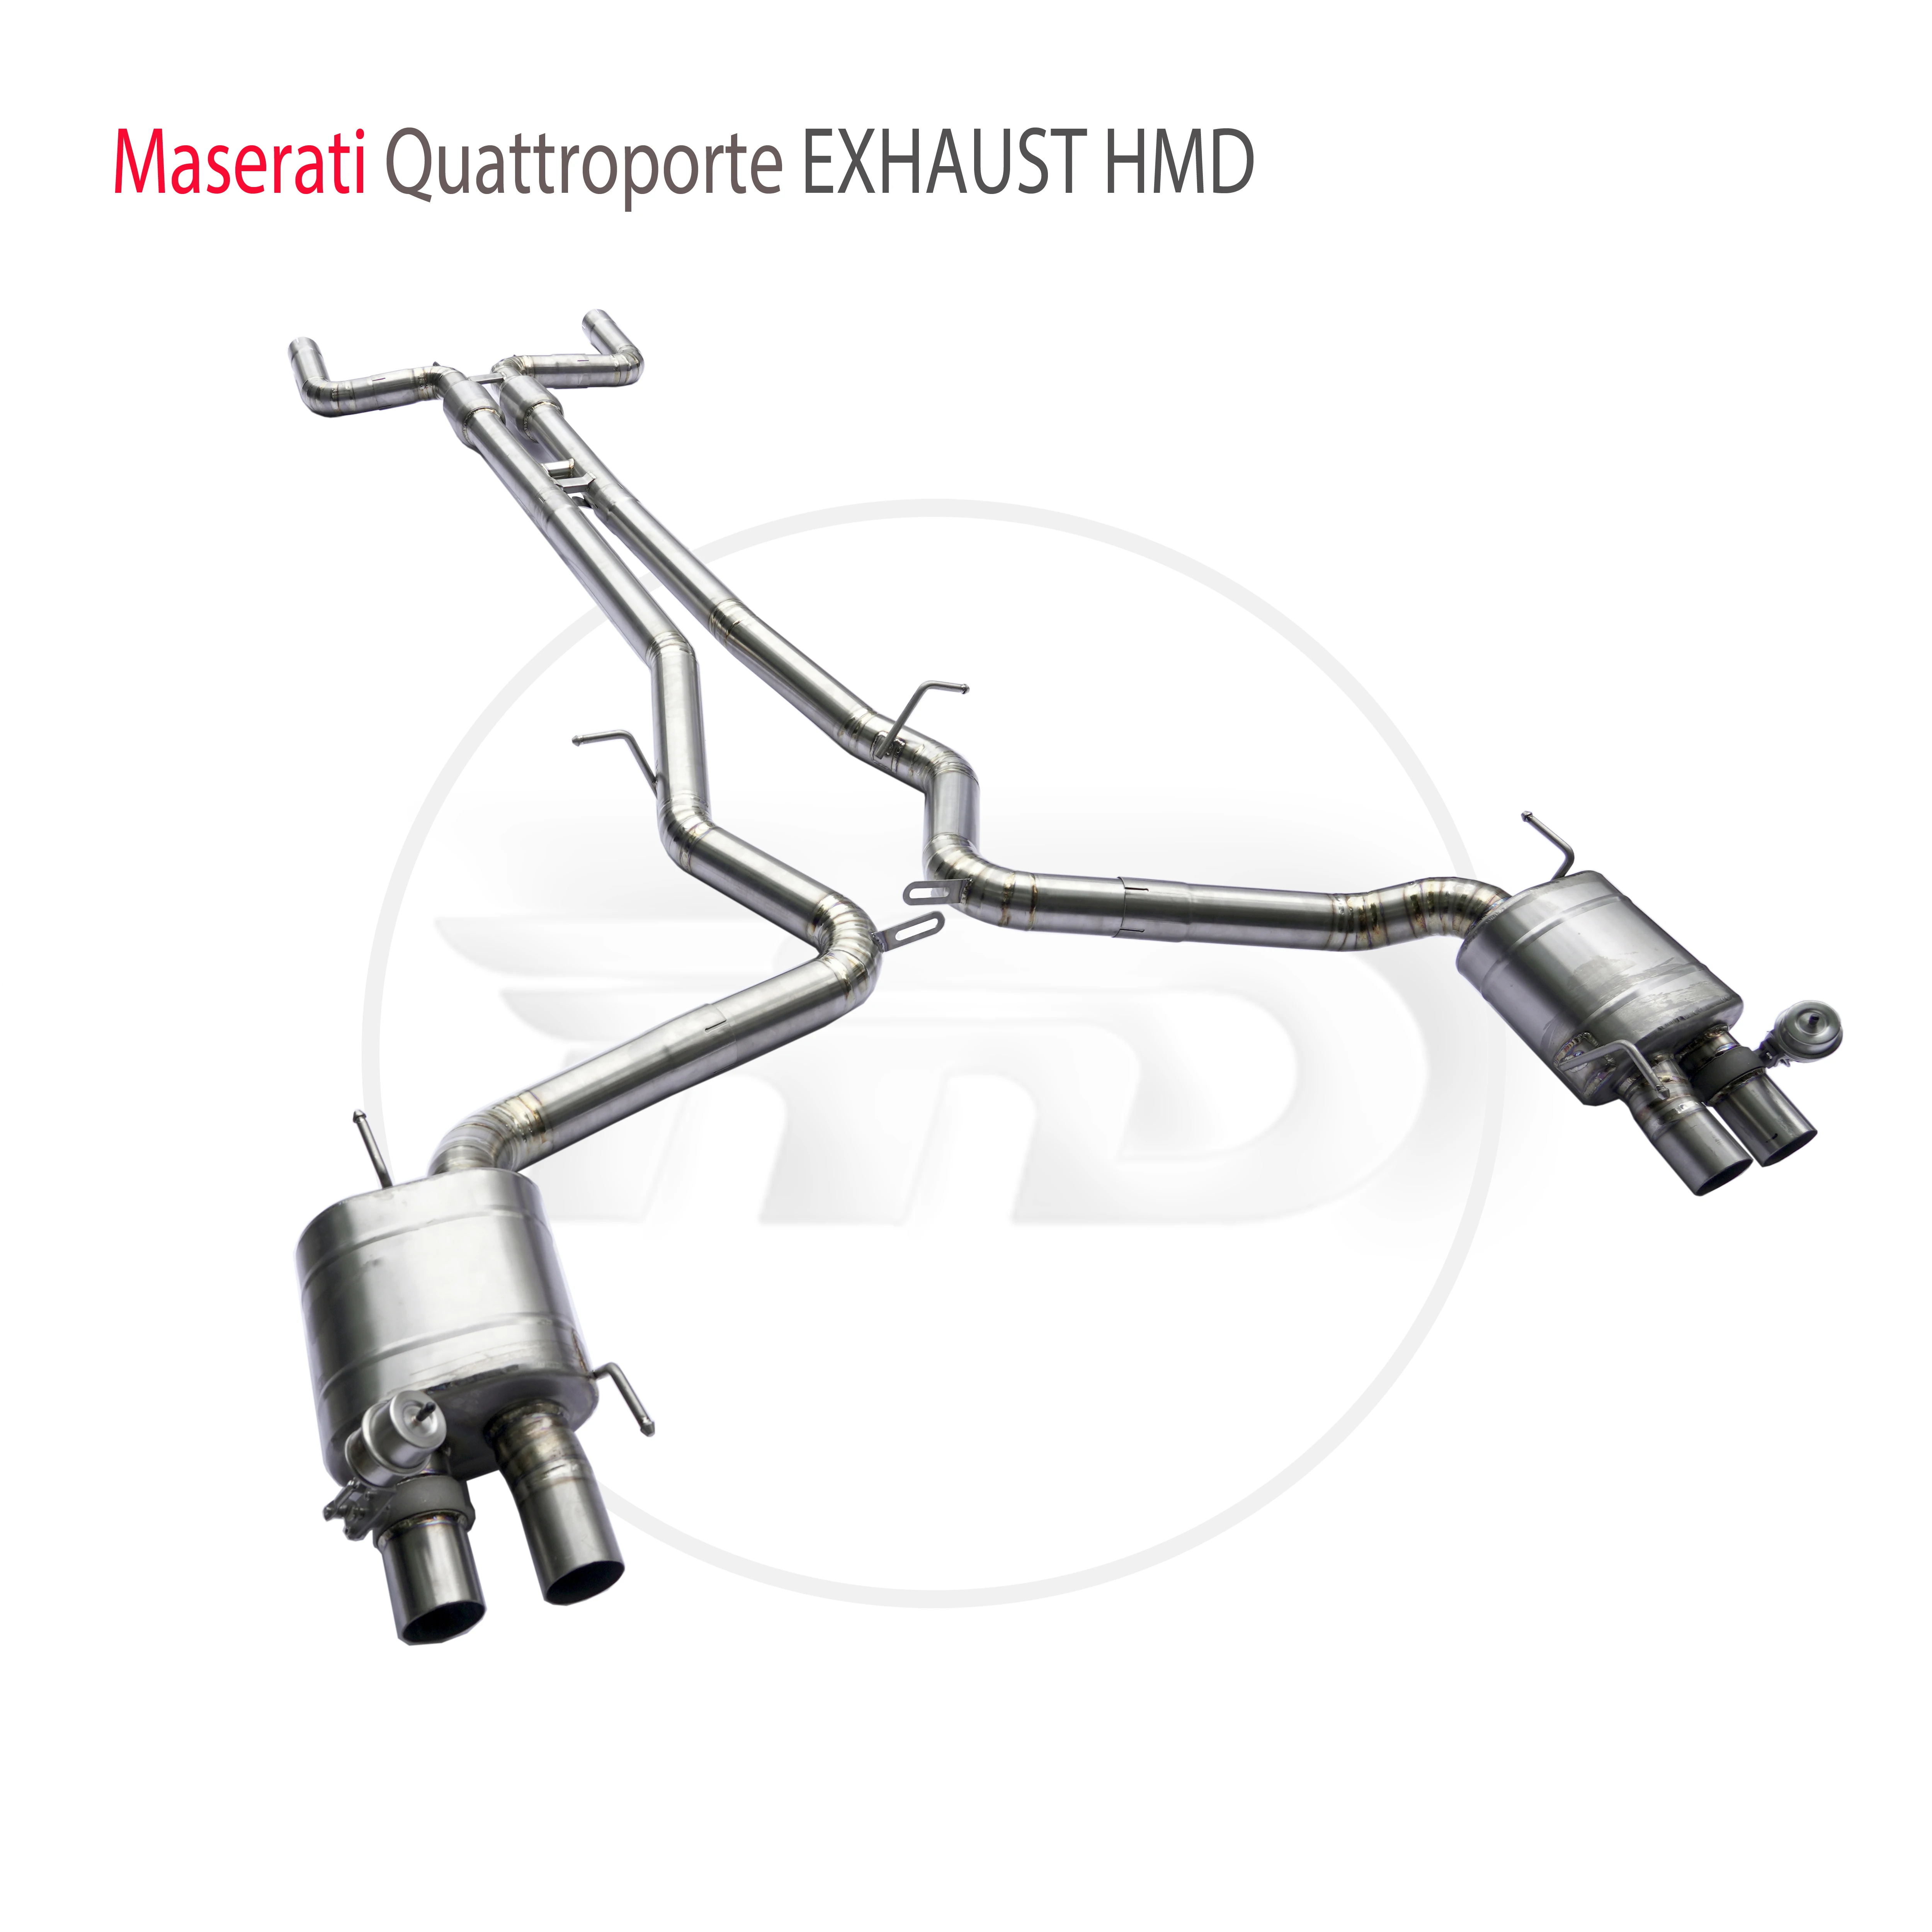 

HMD Titanium Alloy Exhaust System Performance Catback is Suitable For Maserati Quattroporte Auto Modify Electronic Valve